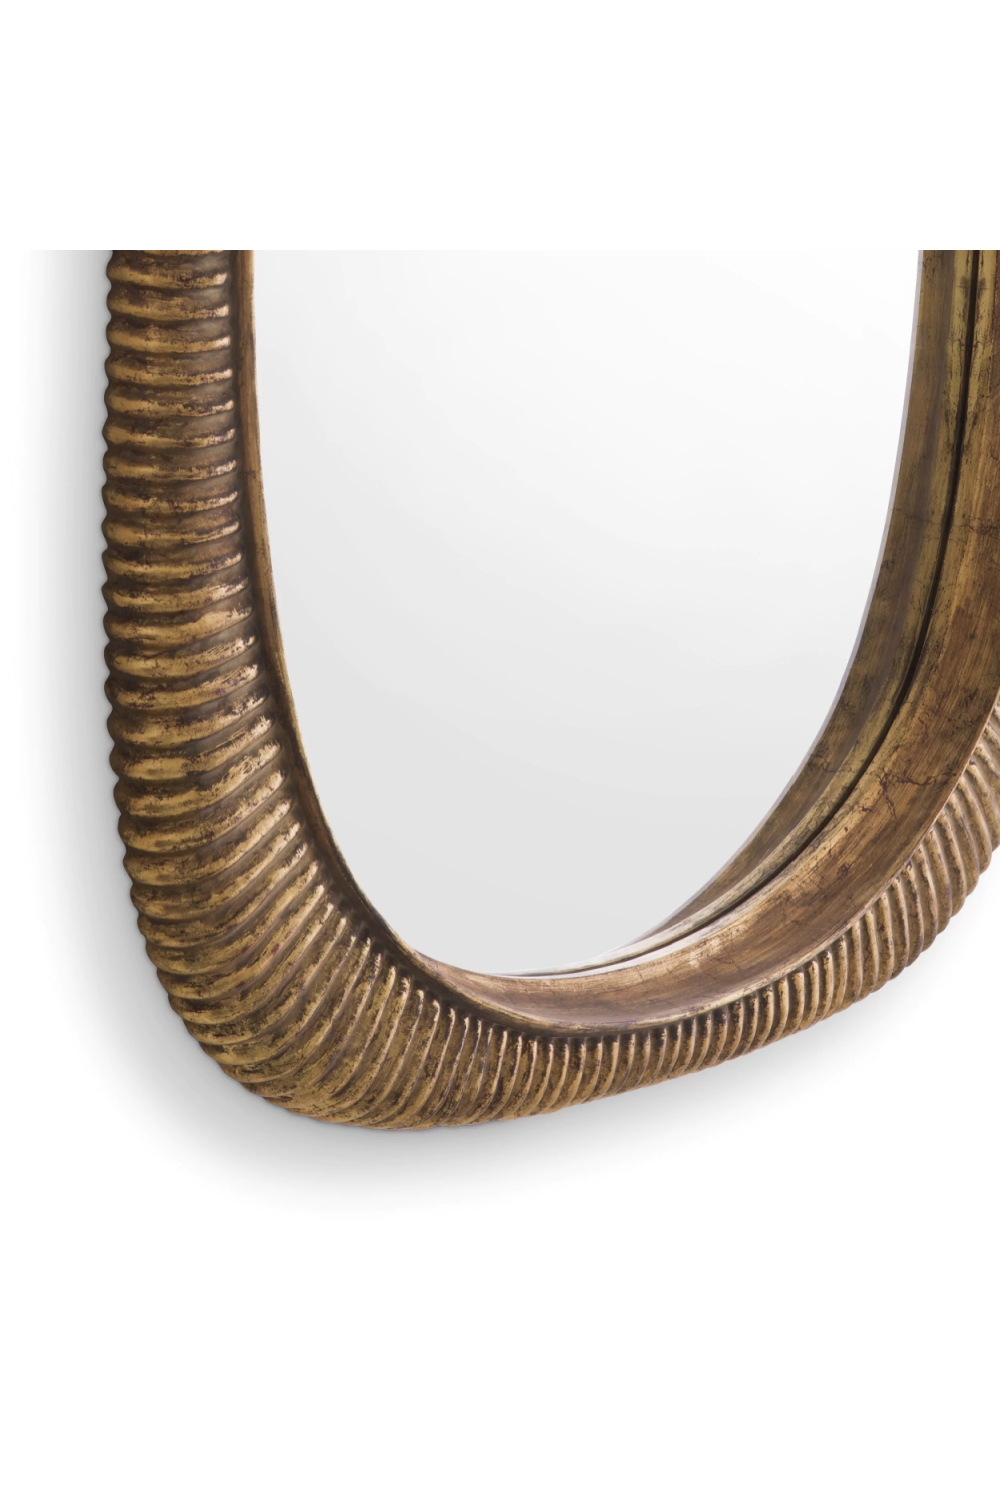 Antique Gold Mirror | Eichholtz Casimir | Oroa.com